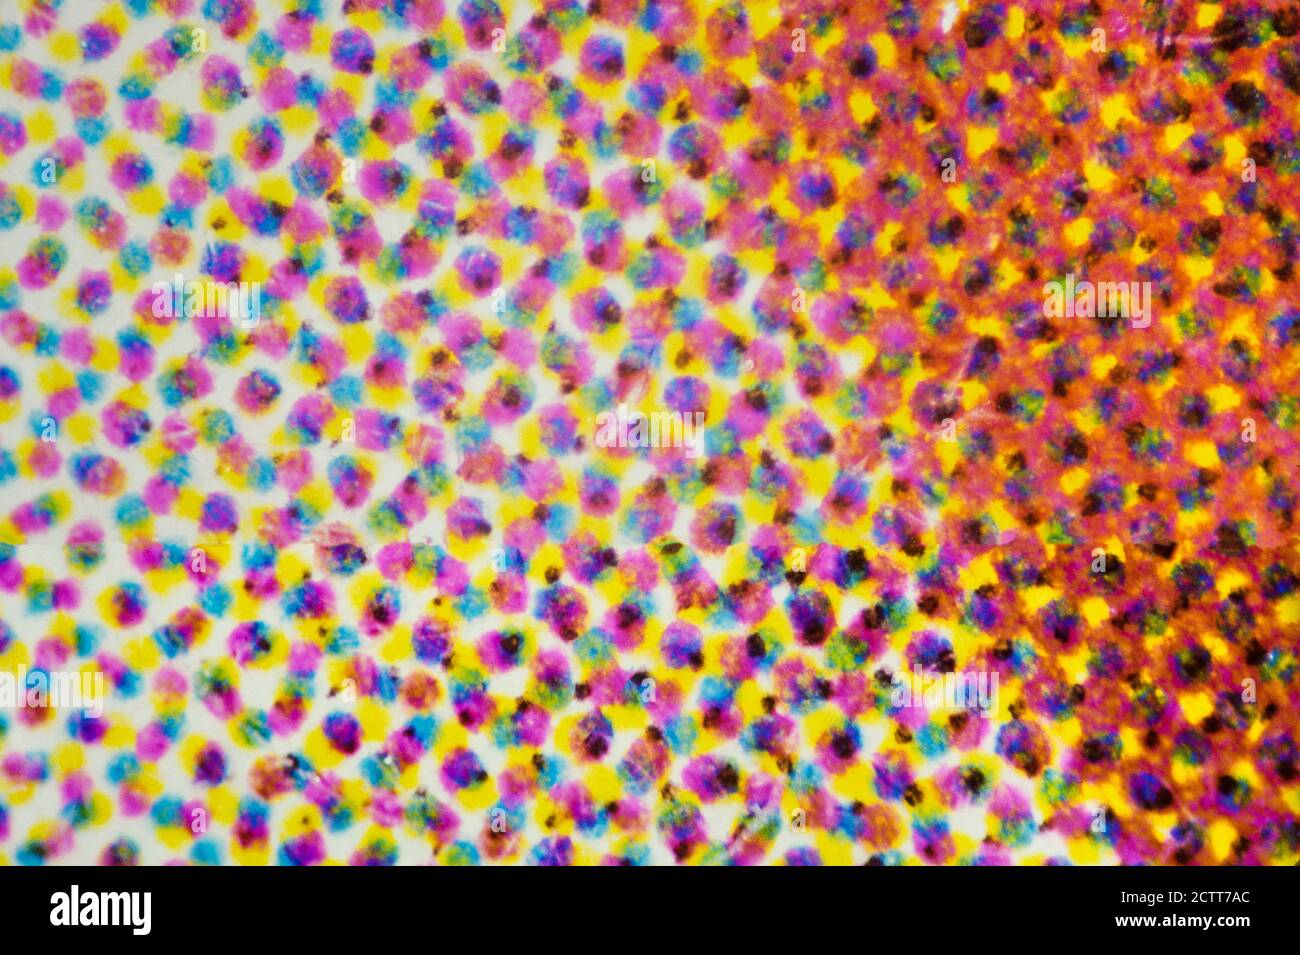 Microscopic view of CMYK printer dots Stock Photo